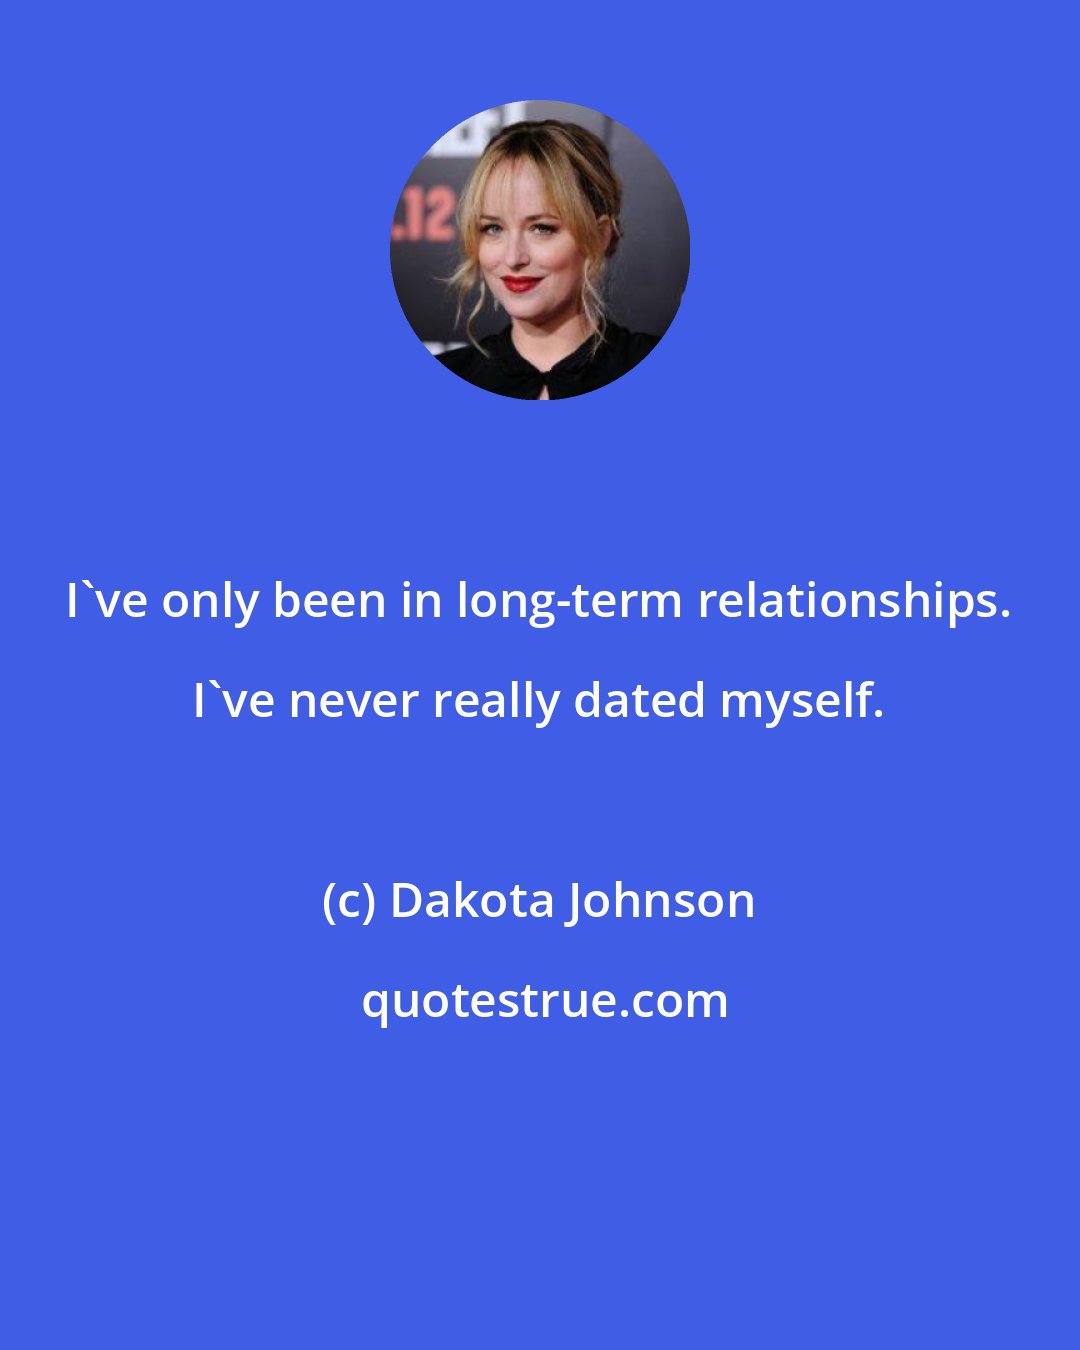 Dakota Johnson: I've only been in long-term relationships. I've never really dated myself.